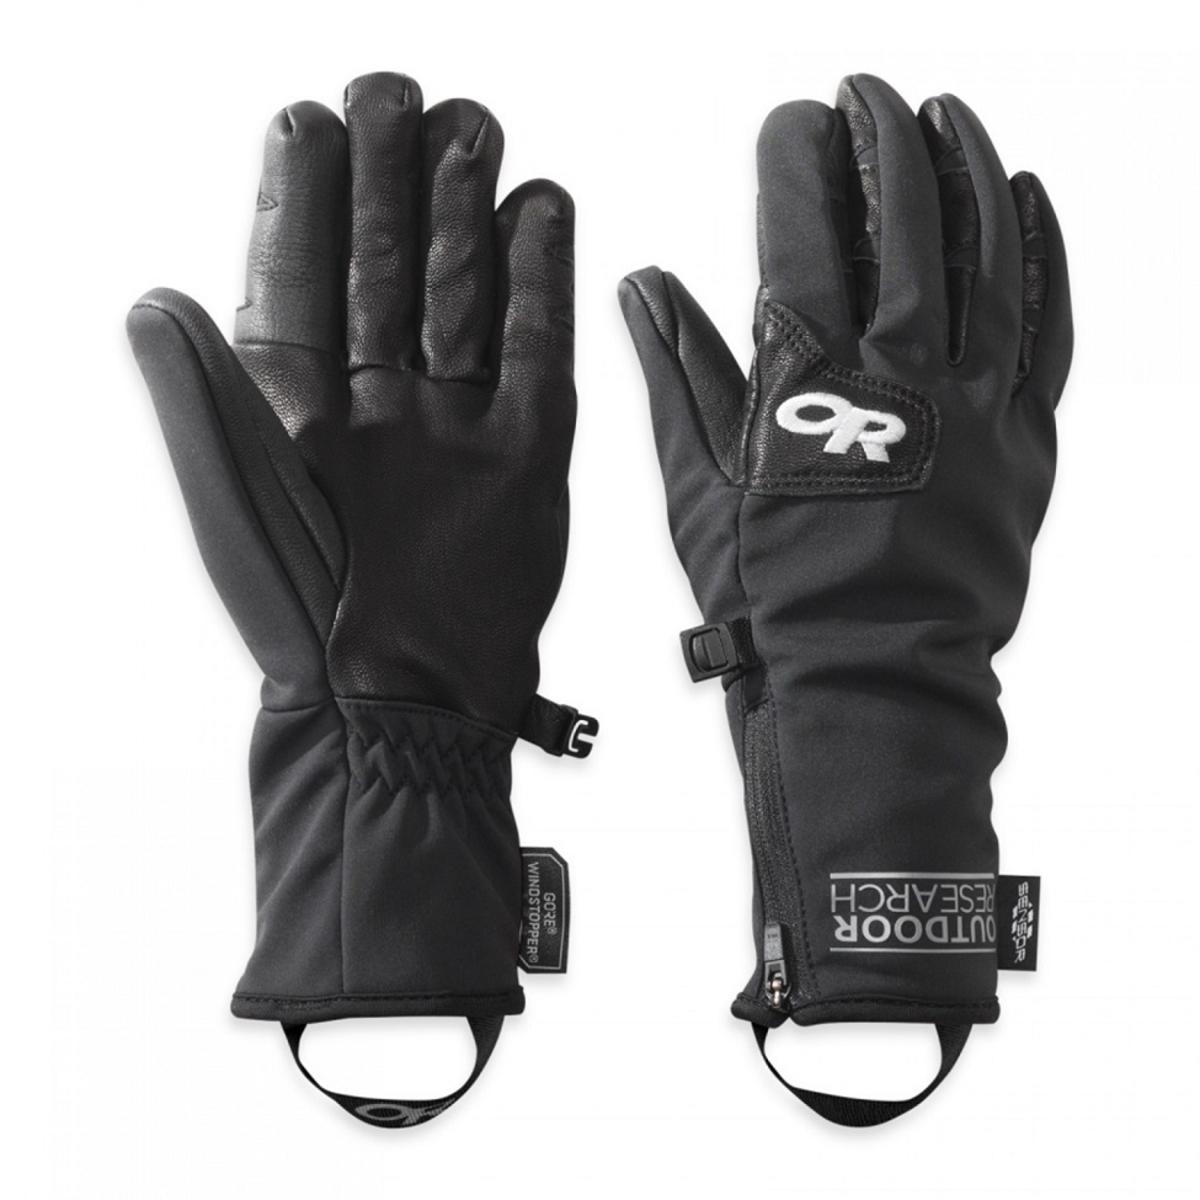 Outdoor Research Stormtracker Sensor Gloves (Size XL)